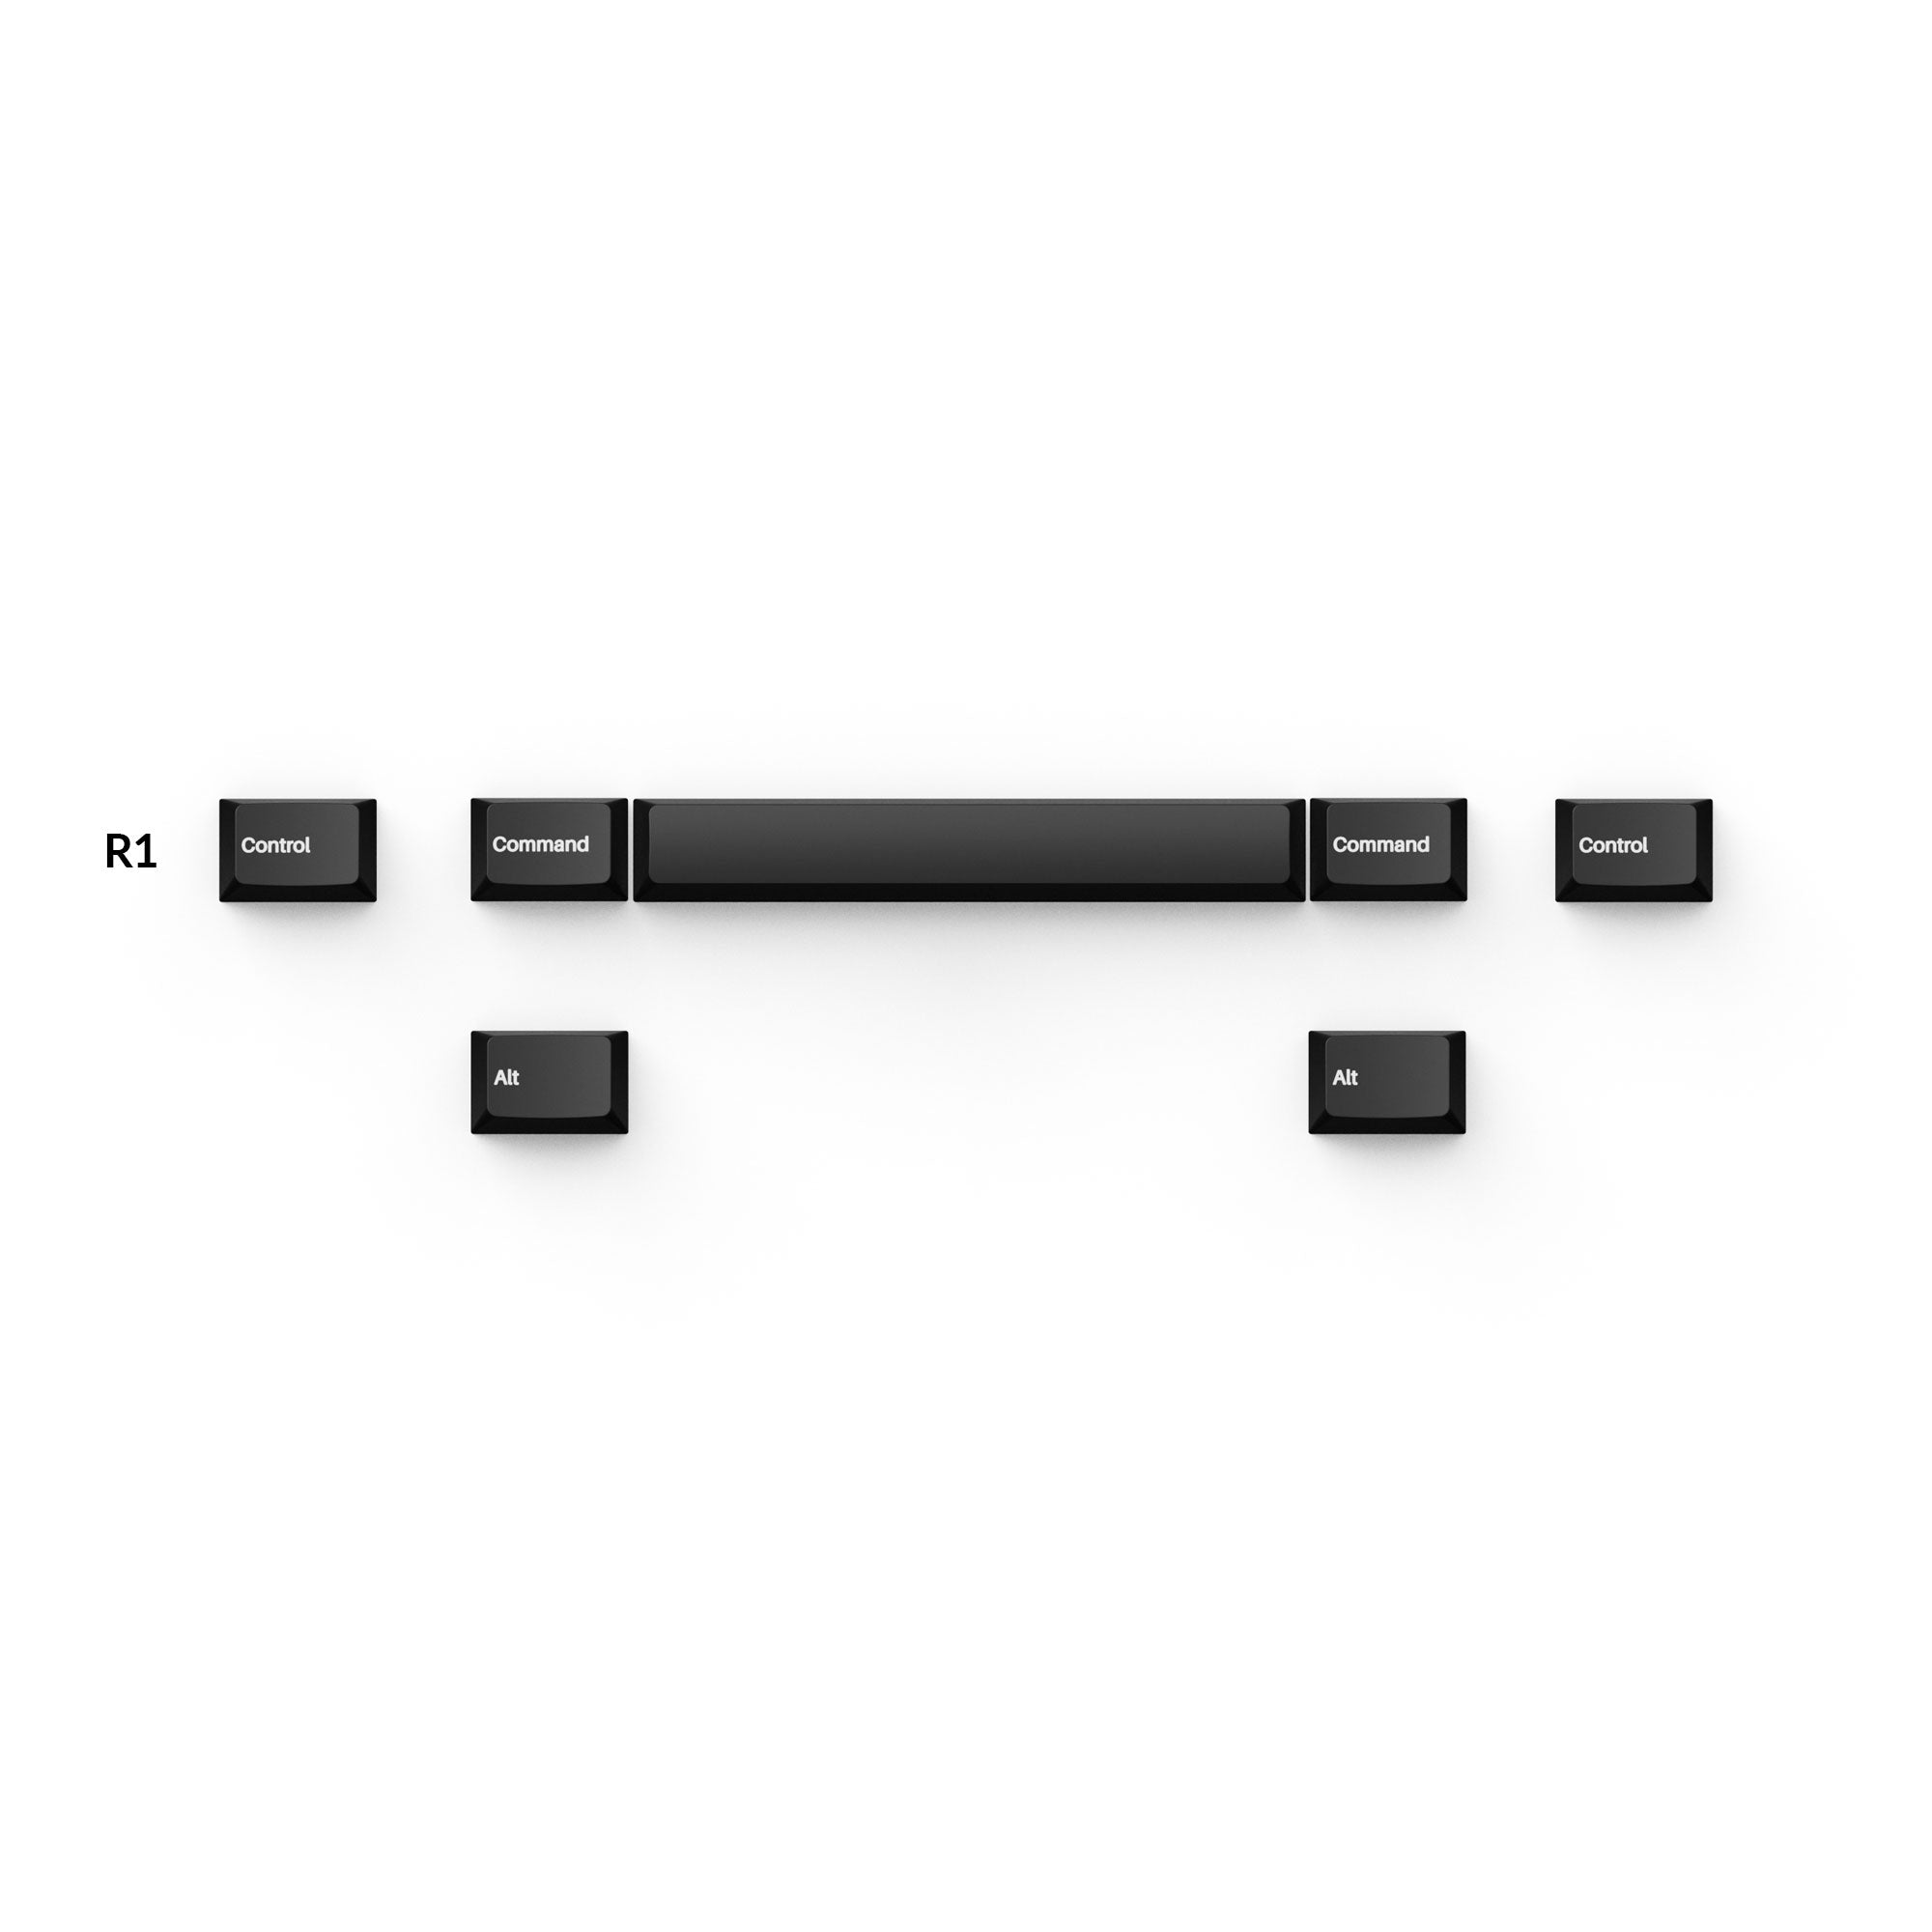 Cherry Profile Double-Shot PBT Keycaps Full Set-White on Black Wob